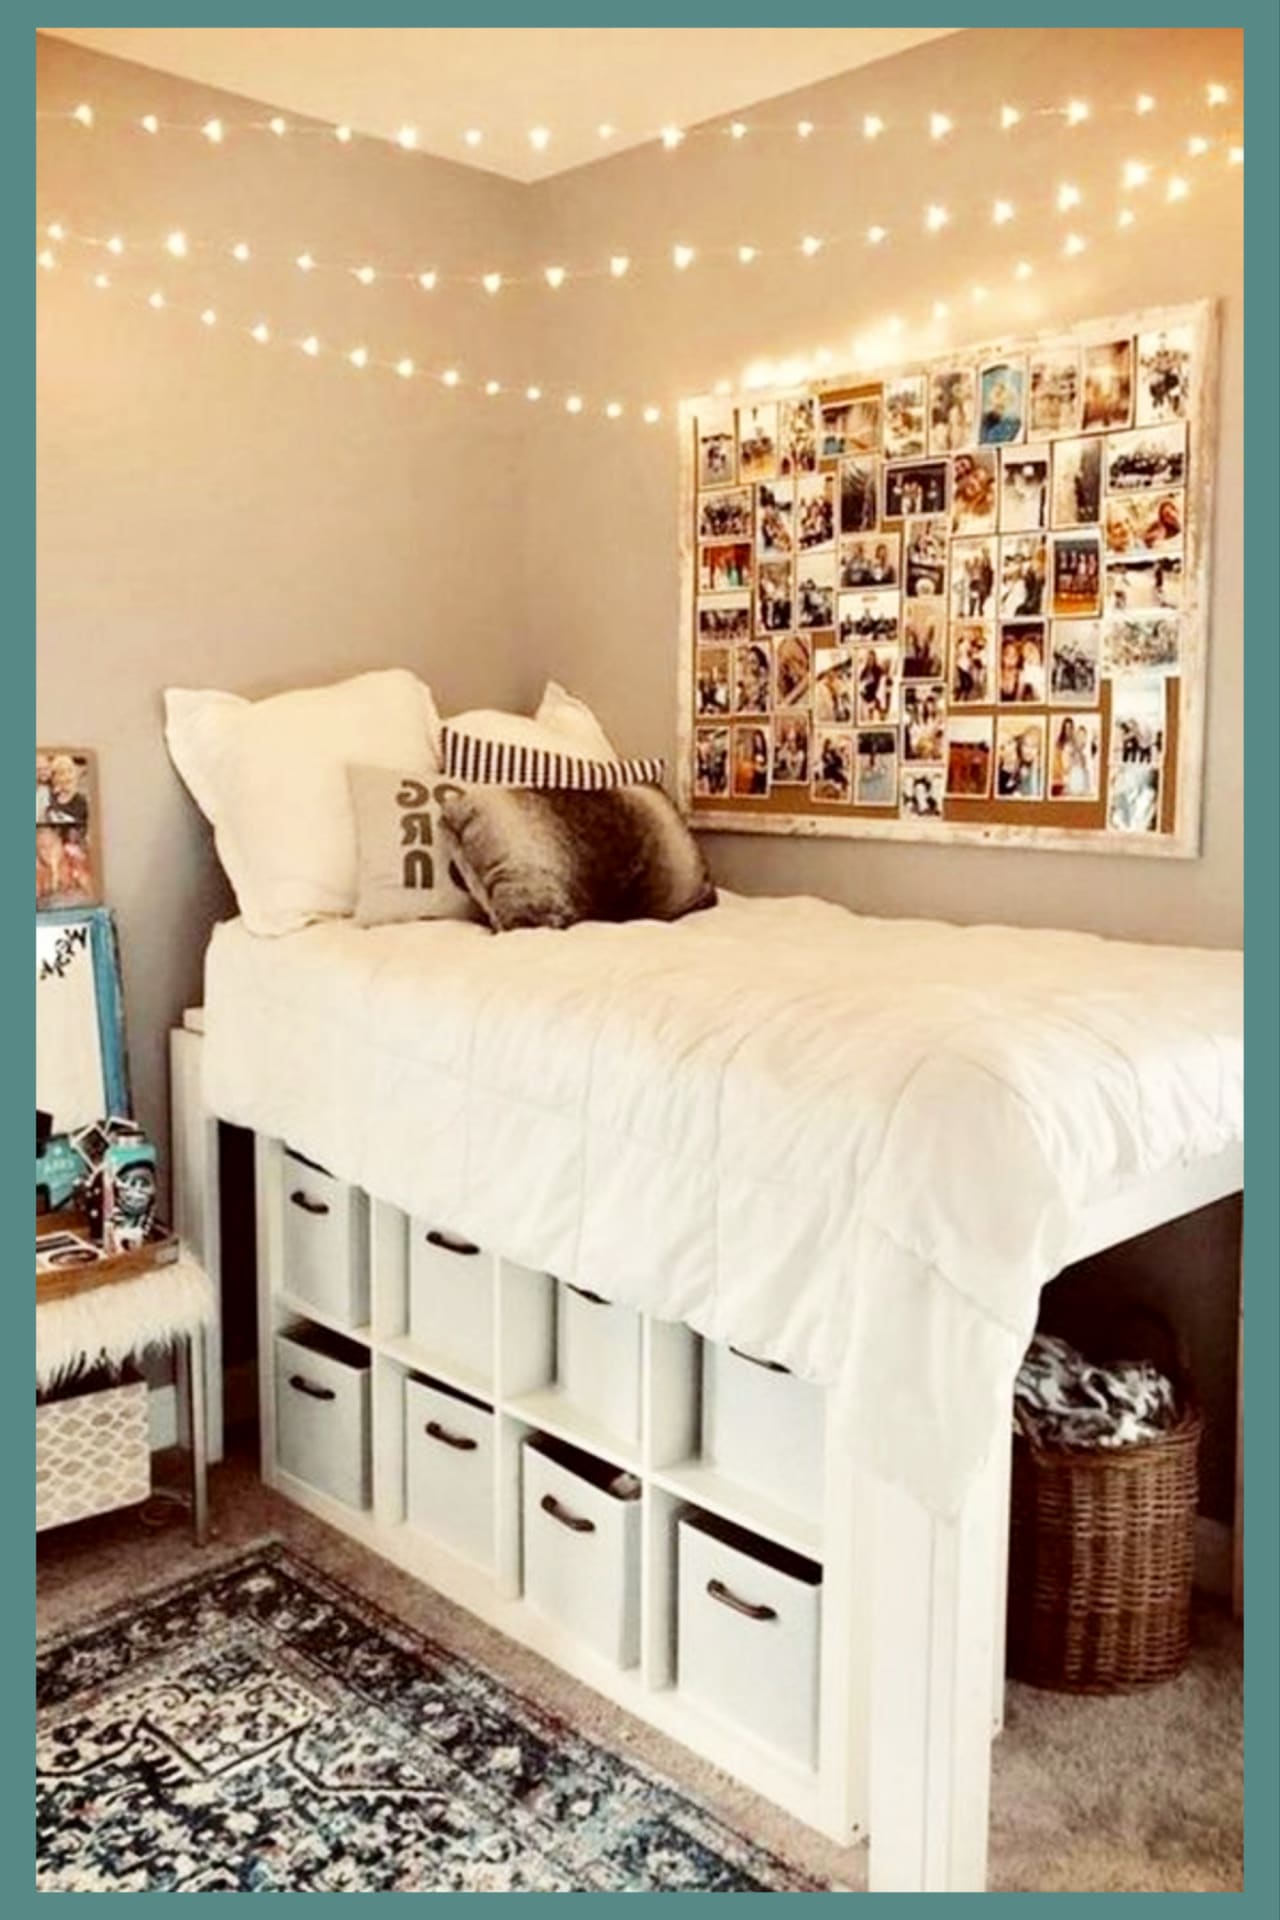 Cute dorm room ideas!  I like the storage area under the dorm room loft bed!